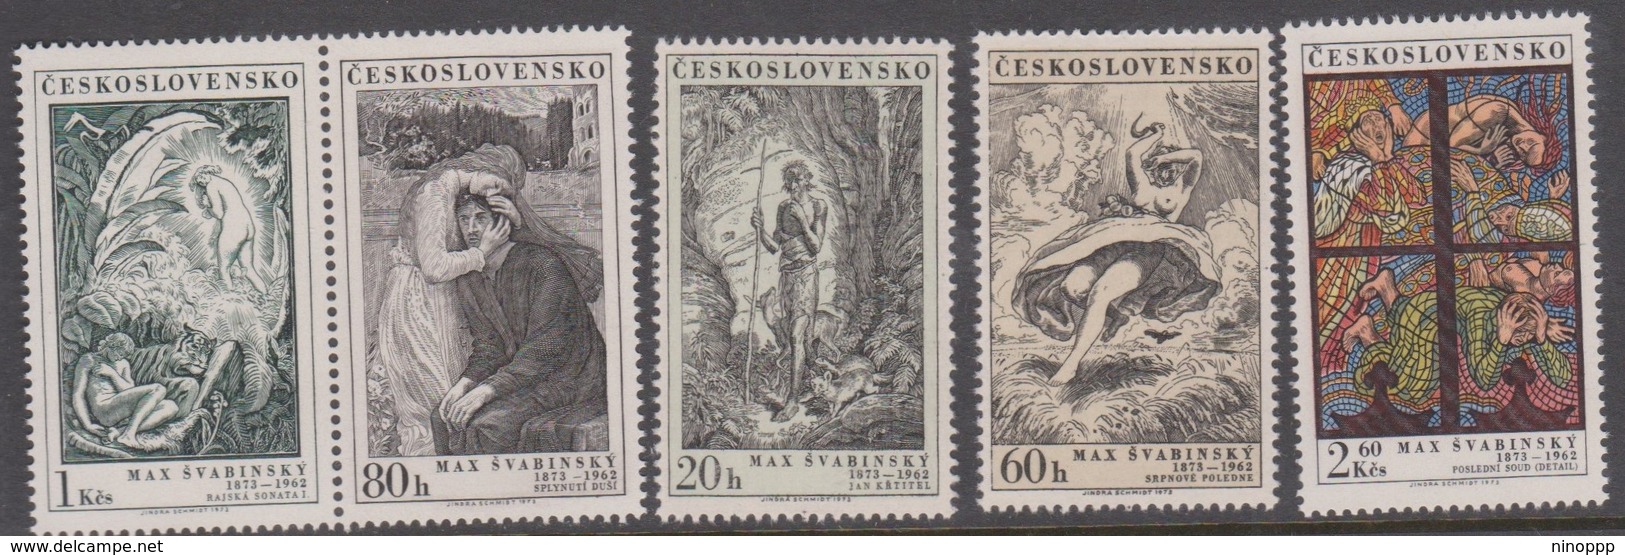 Czechoslovakia Scott 1902-1906 1973 Birth Centenary Of Svabinsky, Mint Never Hinged - Unused Stamps